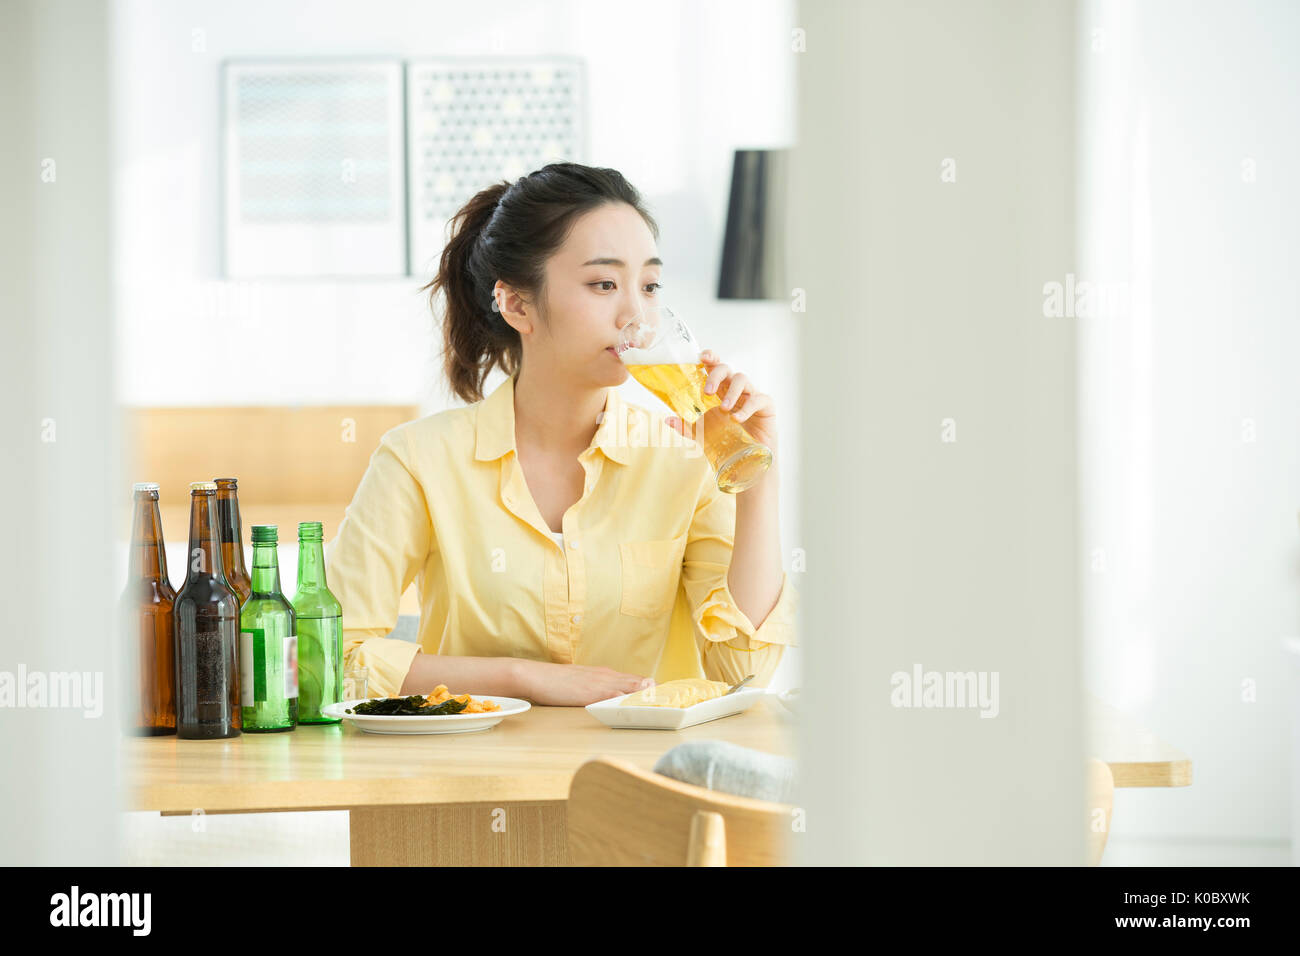 Portrait of single woman drinking alone Stock Photo